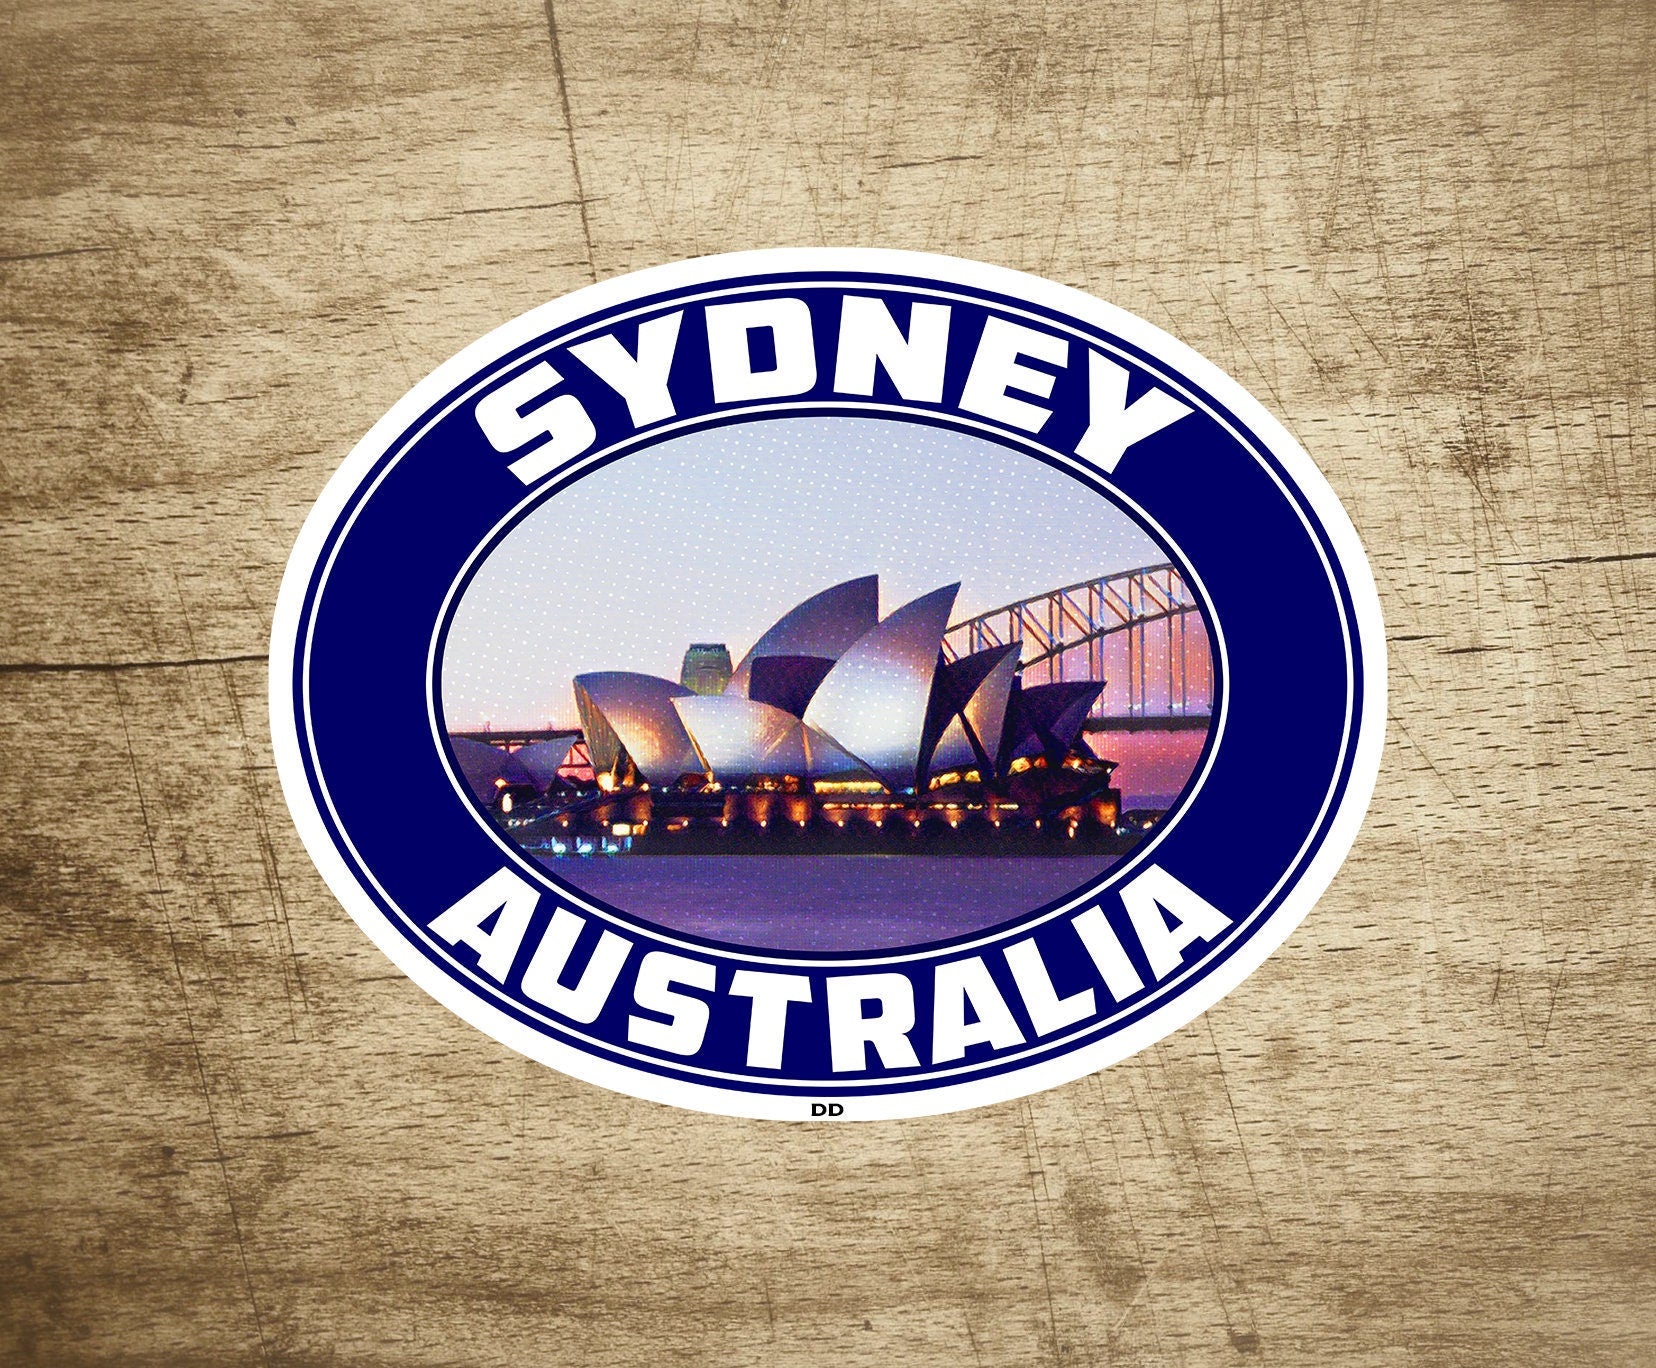 Sydney Australia Opera House Sticker Decal 3 5/8" x 2 3/4" Vinyl